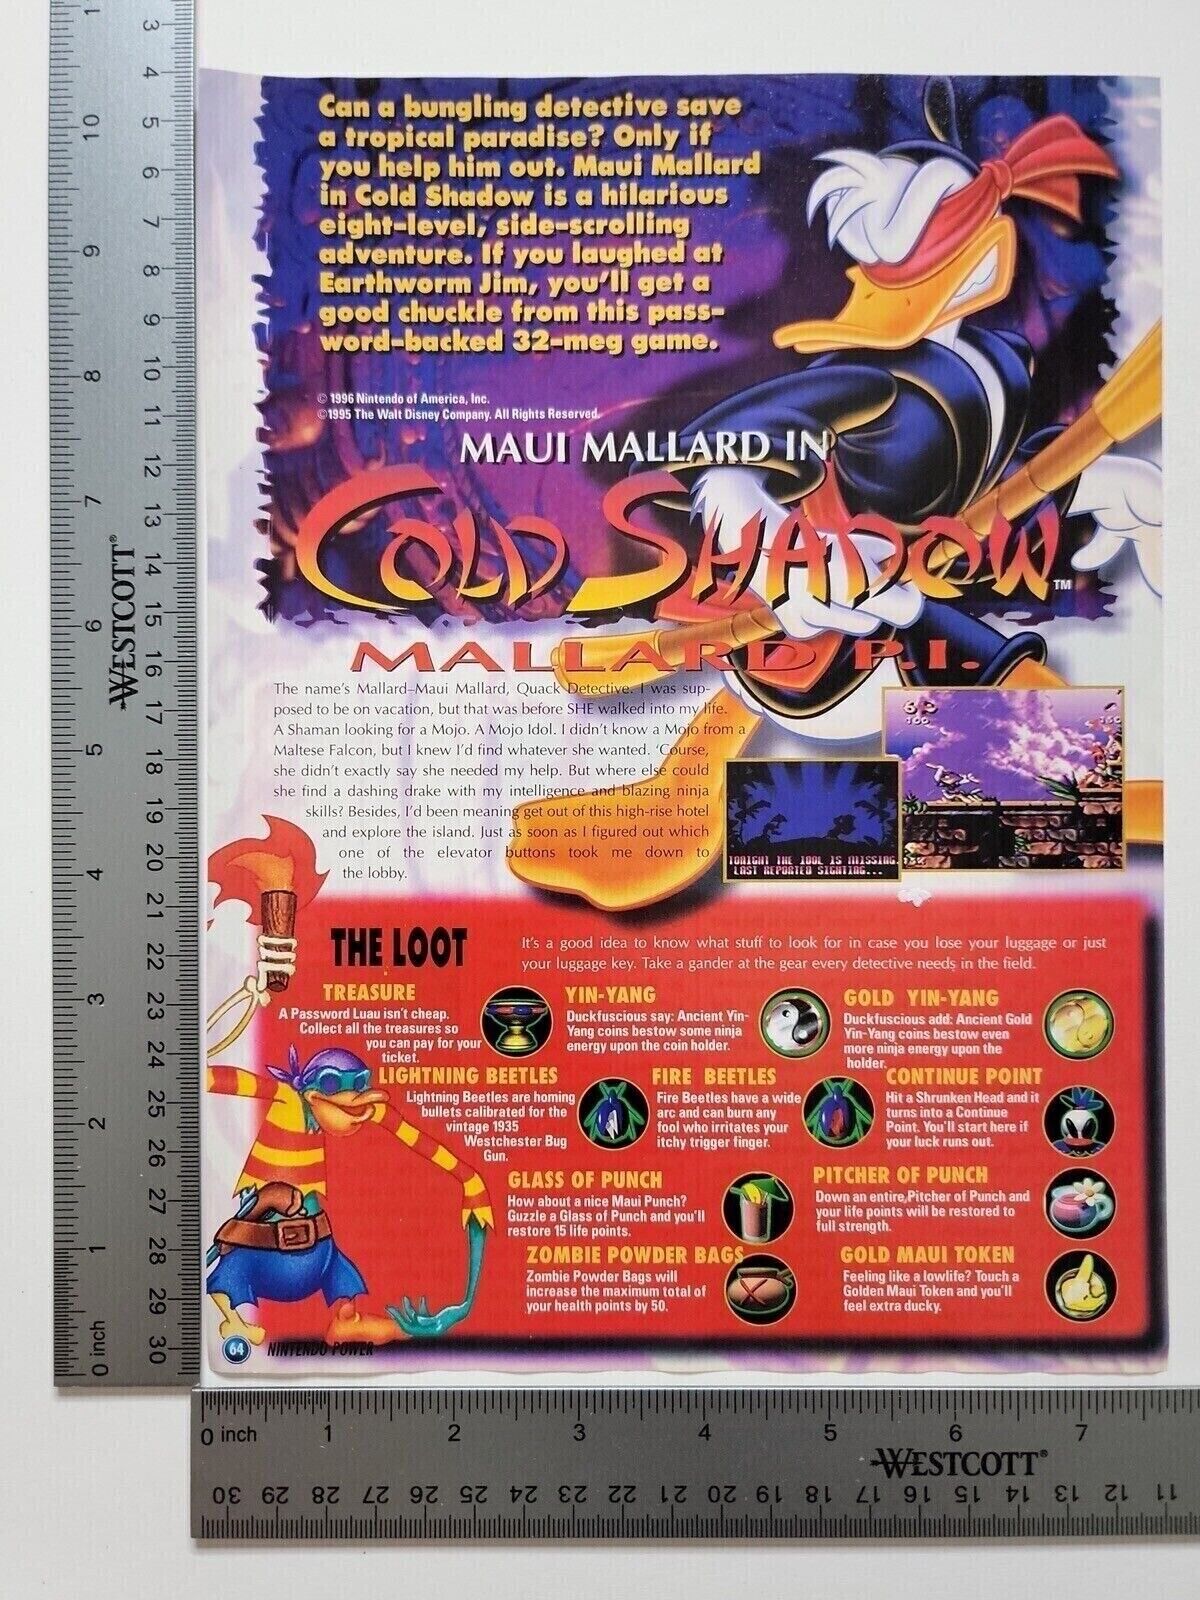 Cold Shadow Mallard Pi Vintage Original Print Ad / Poster Game Gift Art